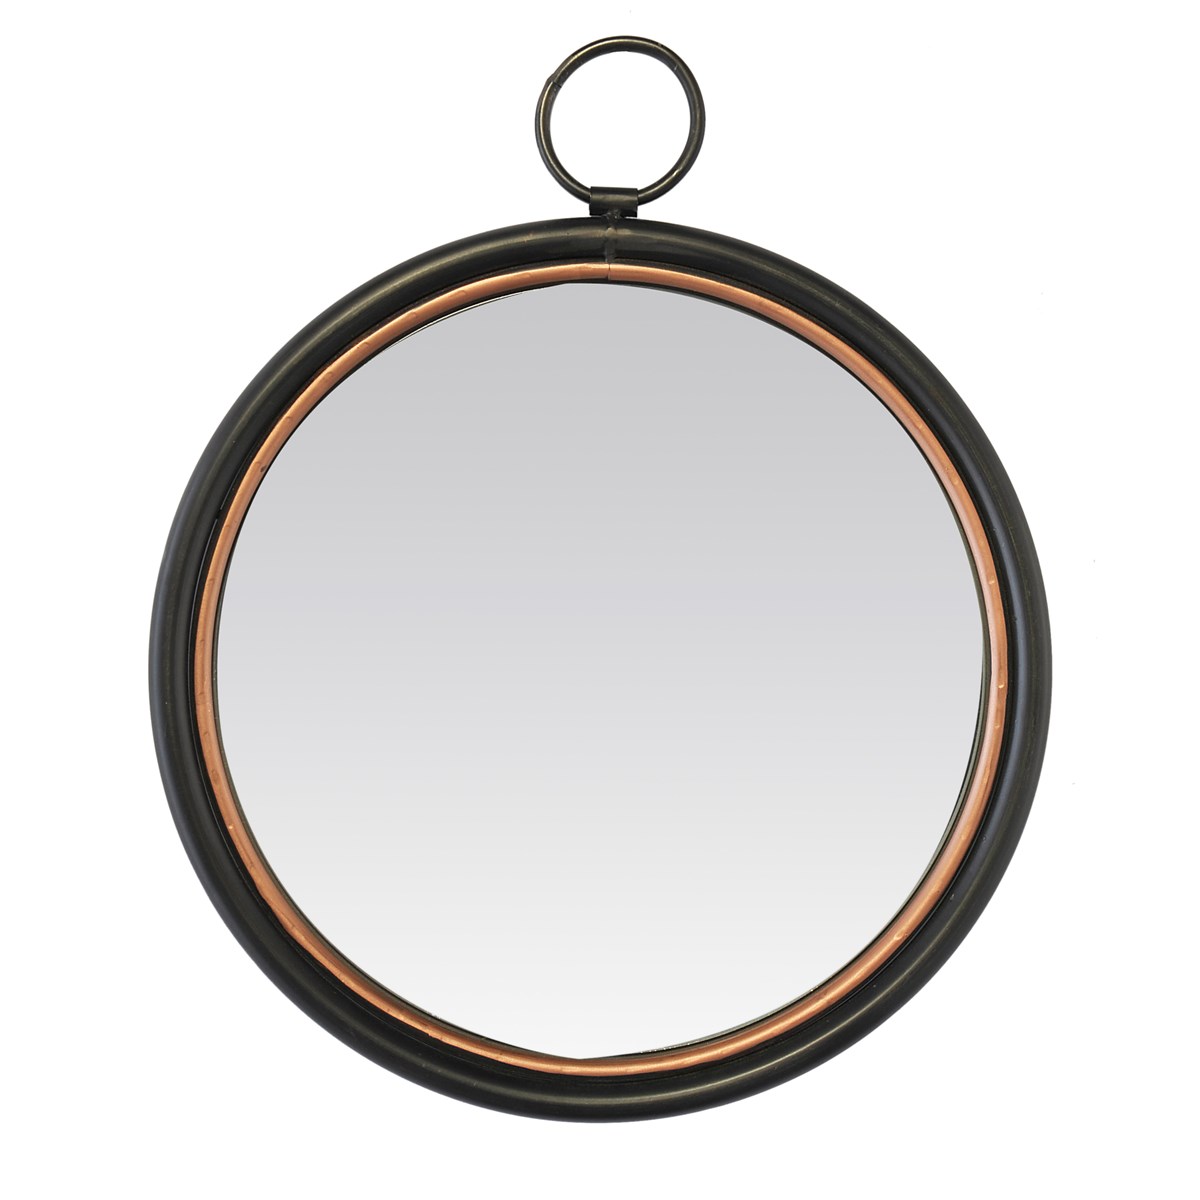 Miroir rond biseaute metal anneau